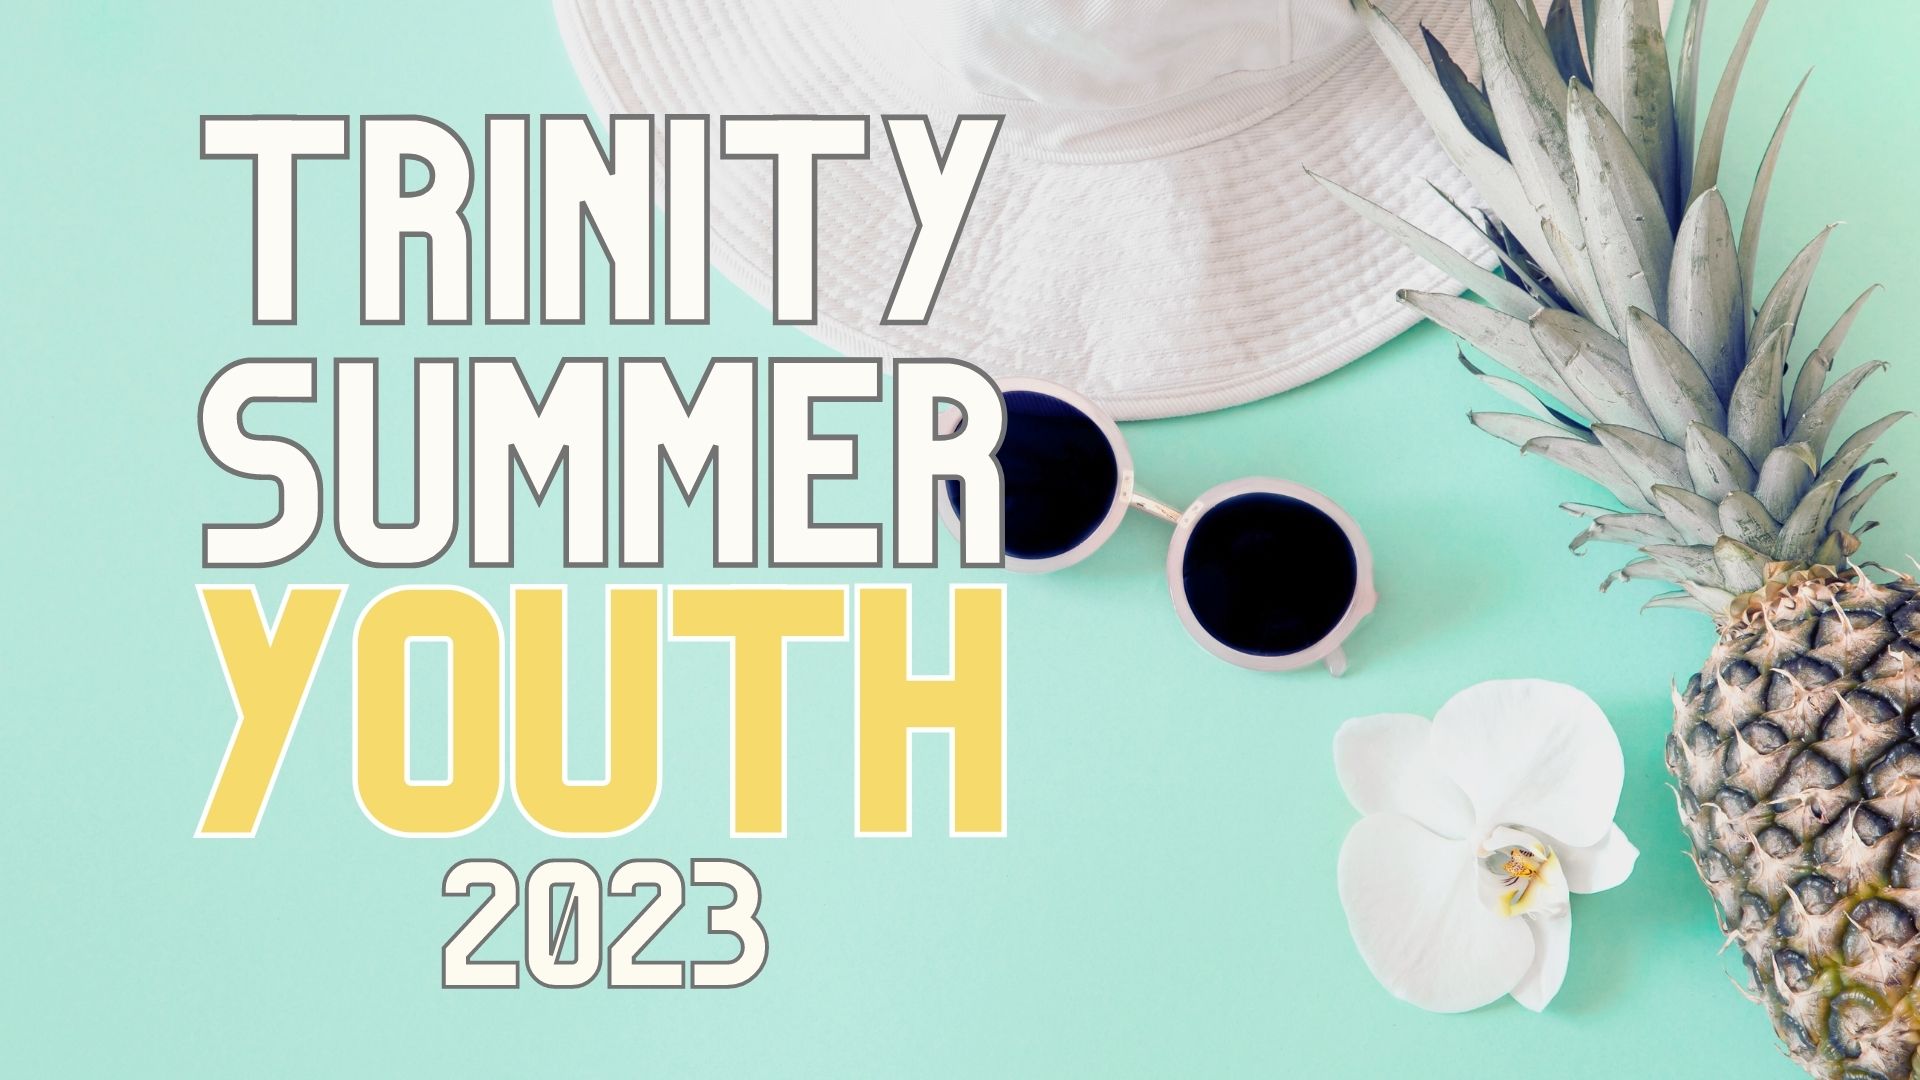 2023 Summer Youth Stuff image